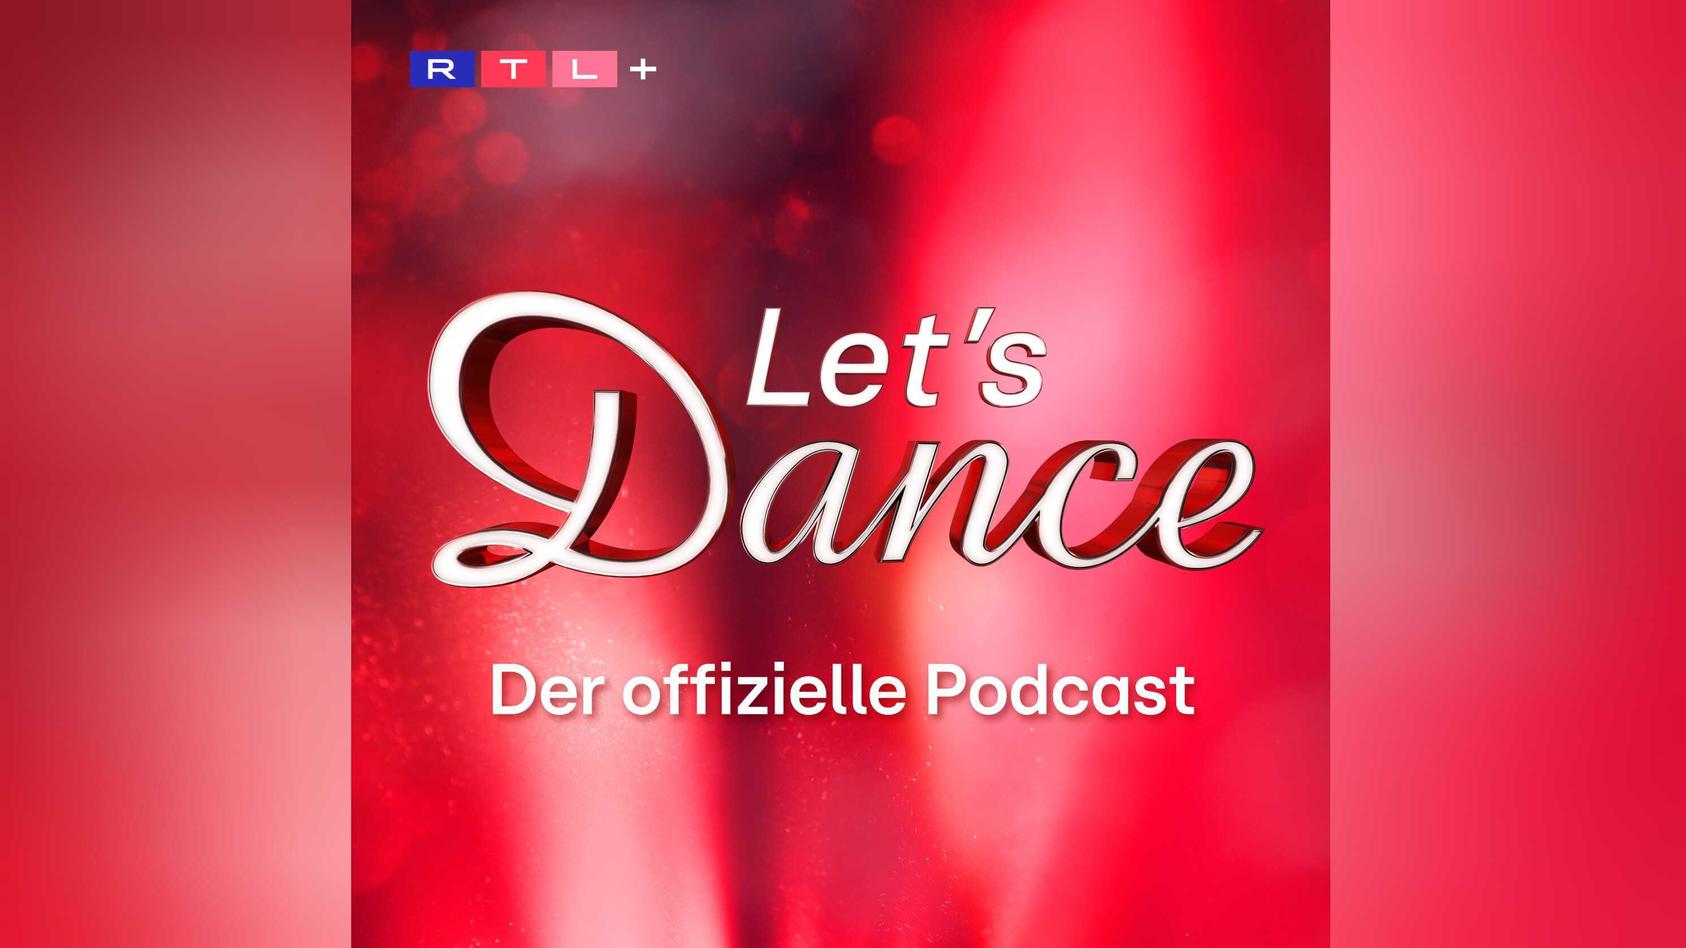 Der offizielle Podcast zu "Let's Dance"